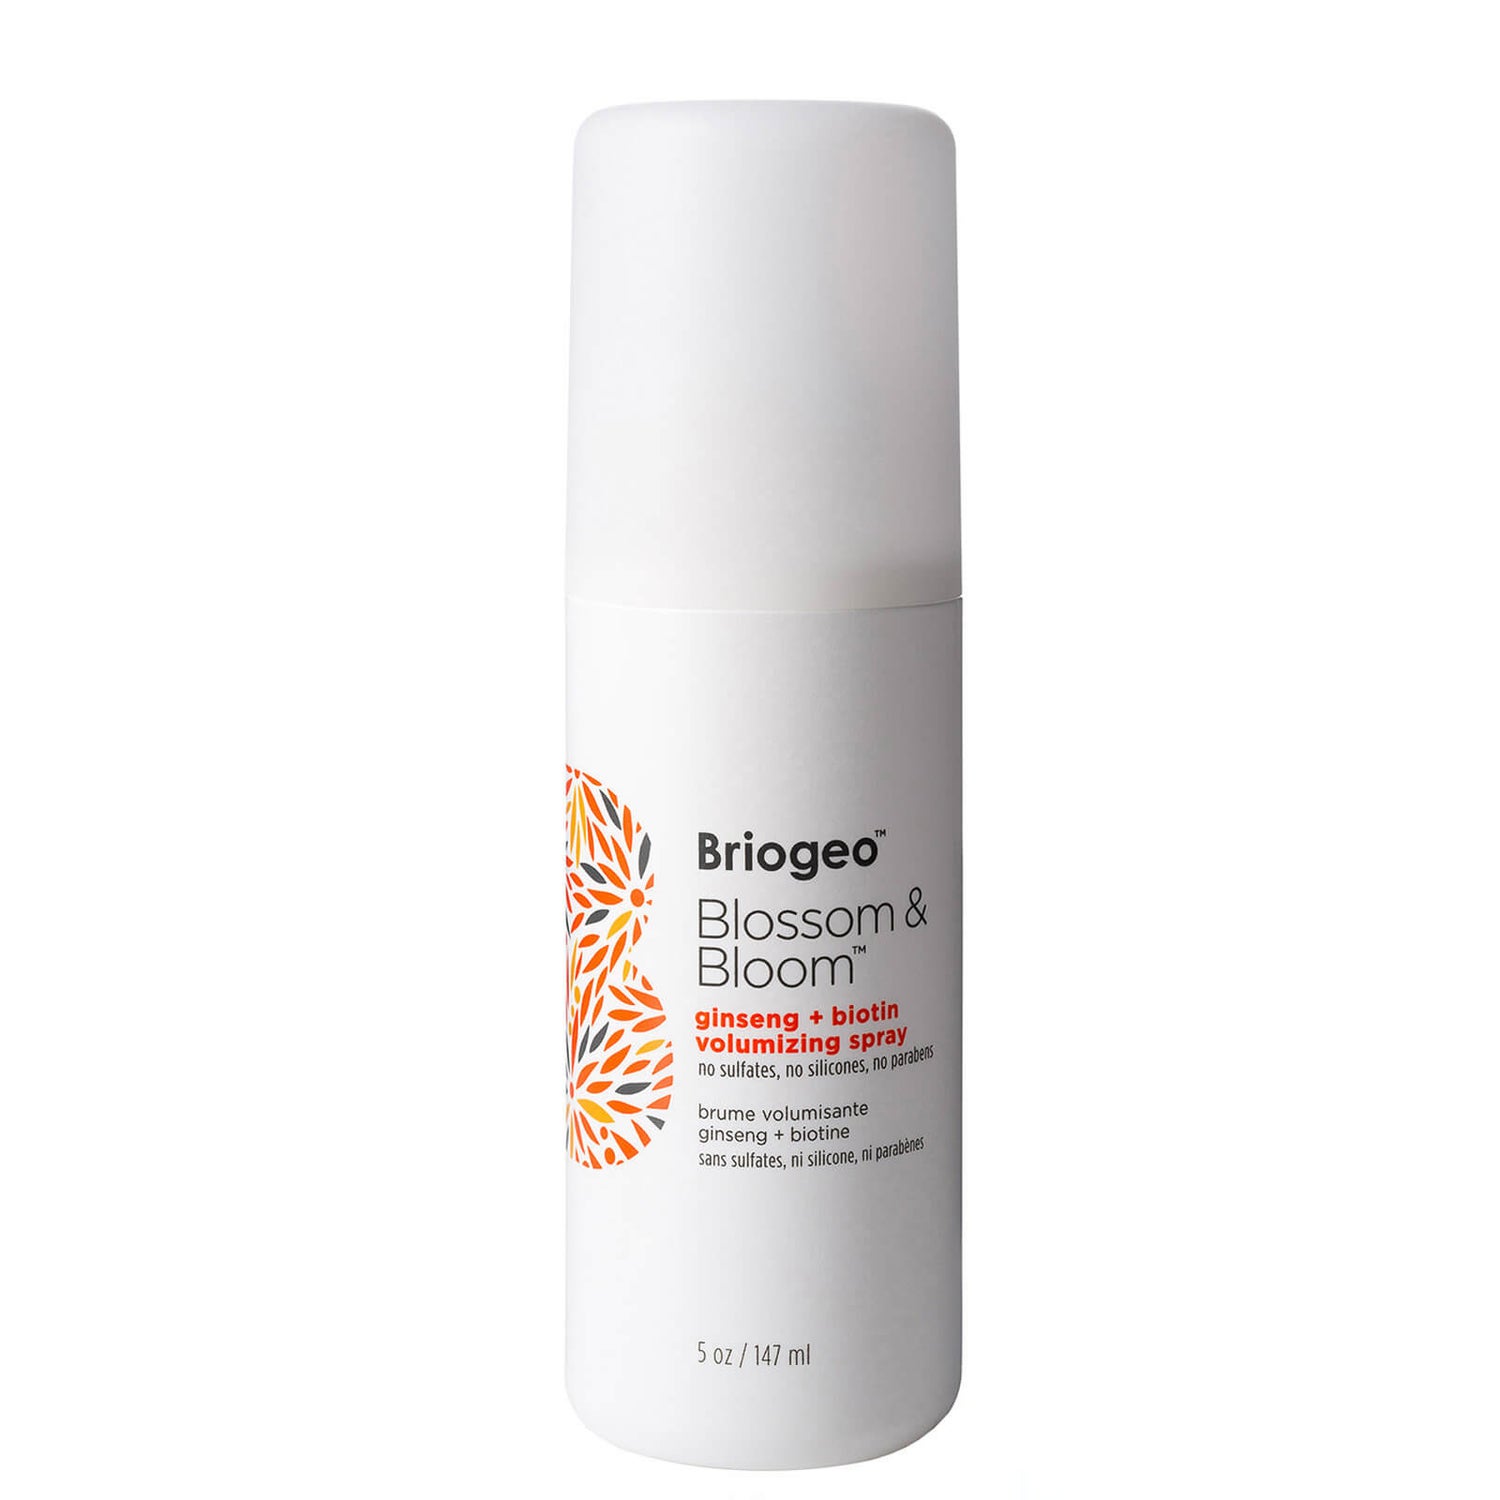 Briogeo Blossom & Bloom Ginseng + Biotin Hair Thickening + Volumizing Spray